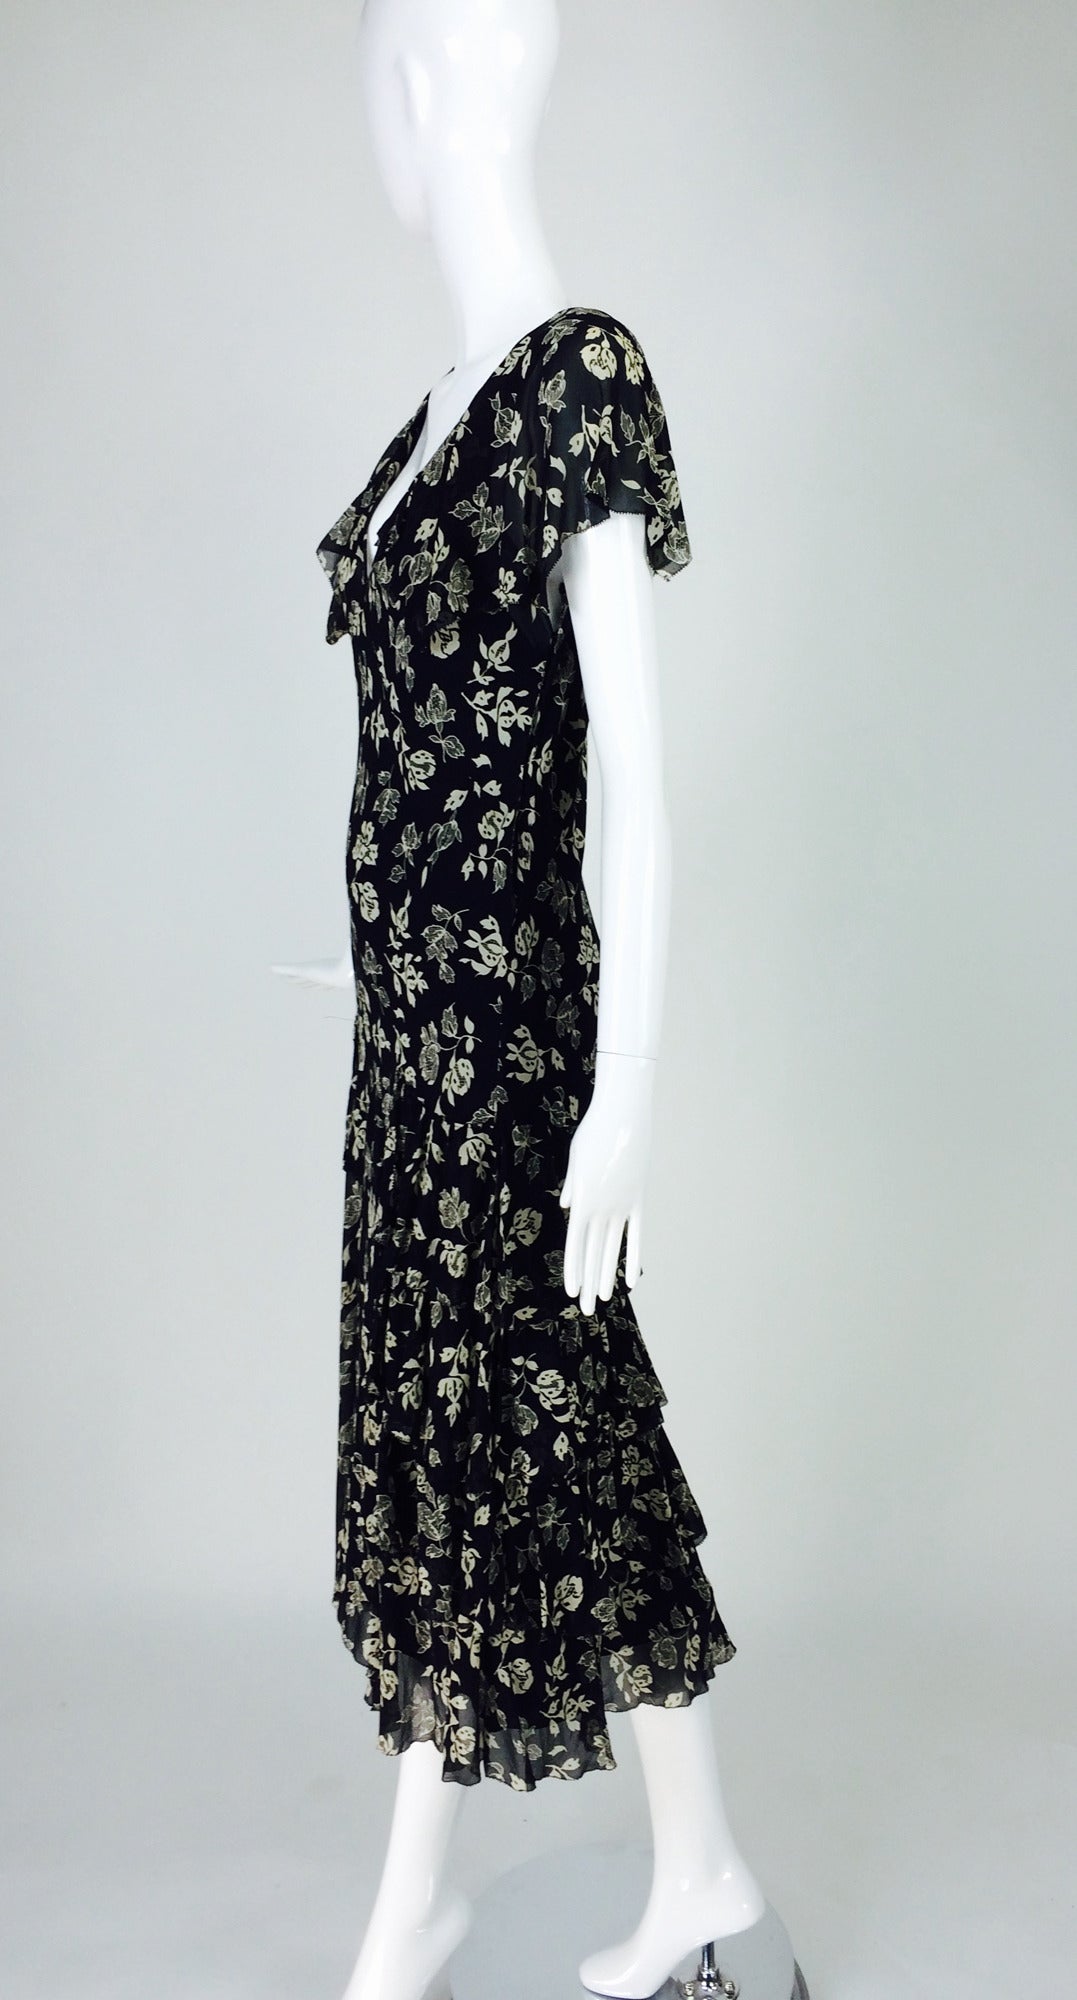 Women's Ralph Lauren 1930s inspired black & cream silk chiffon dress